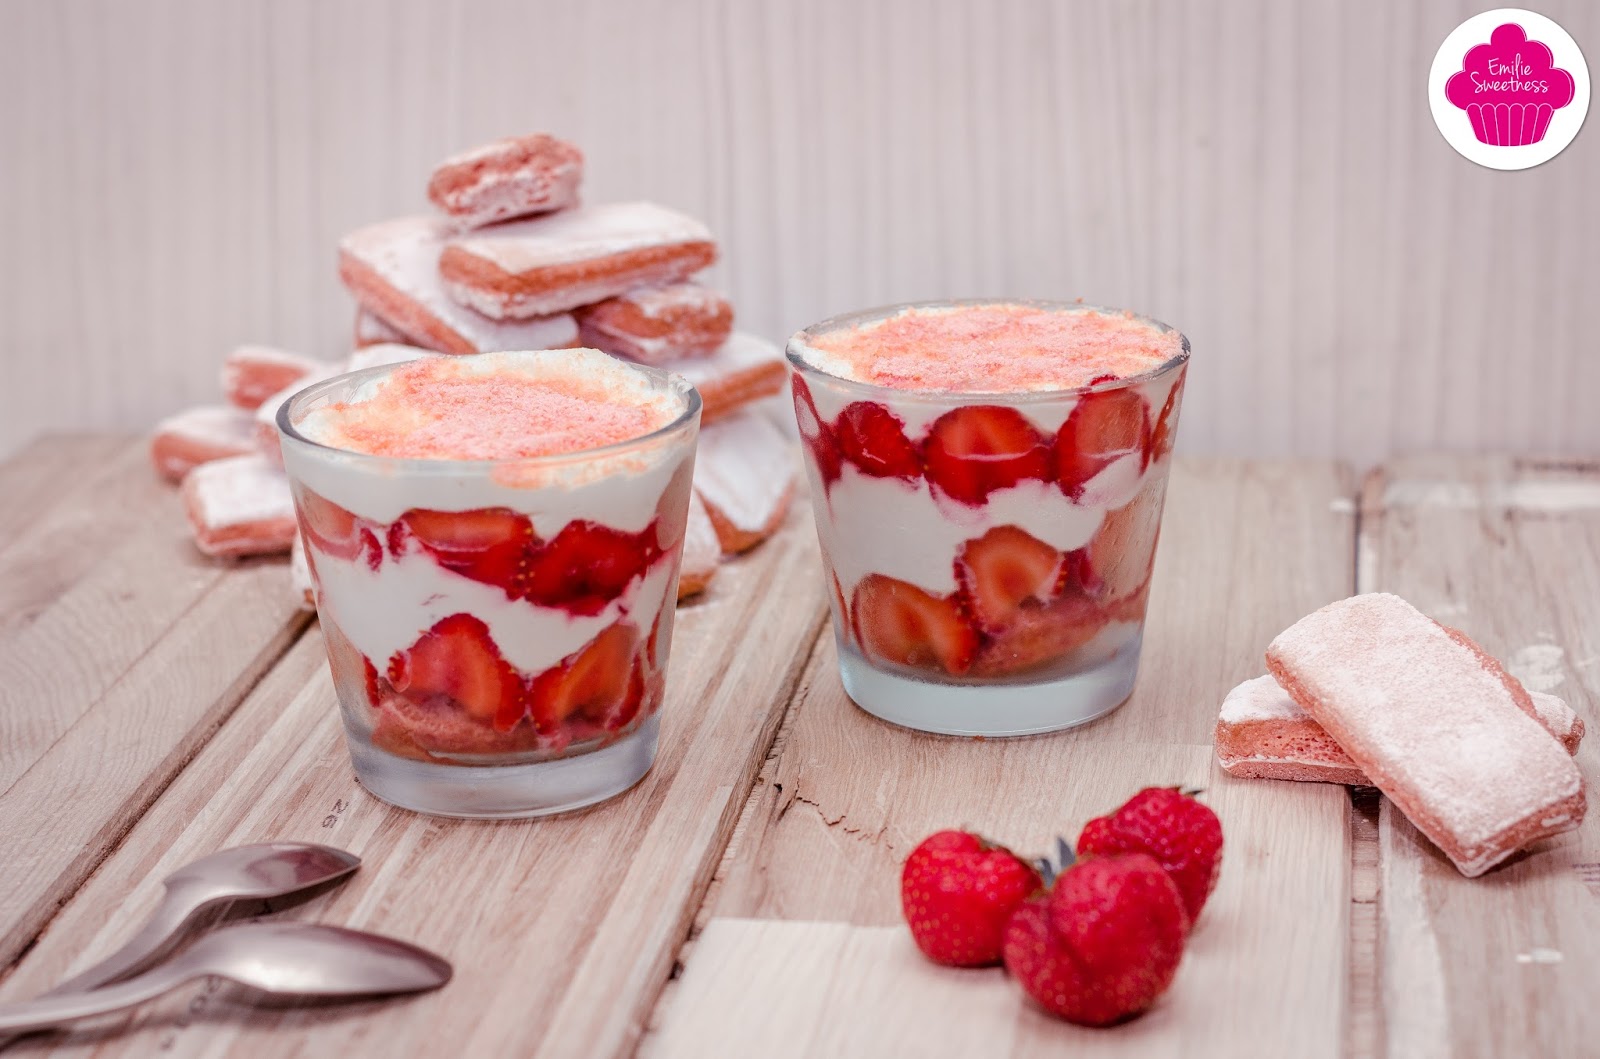 Emilie Sweetness: Tiramisu aux fraises et biscuits roses de Reims ...